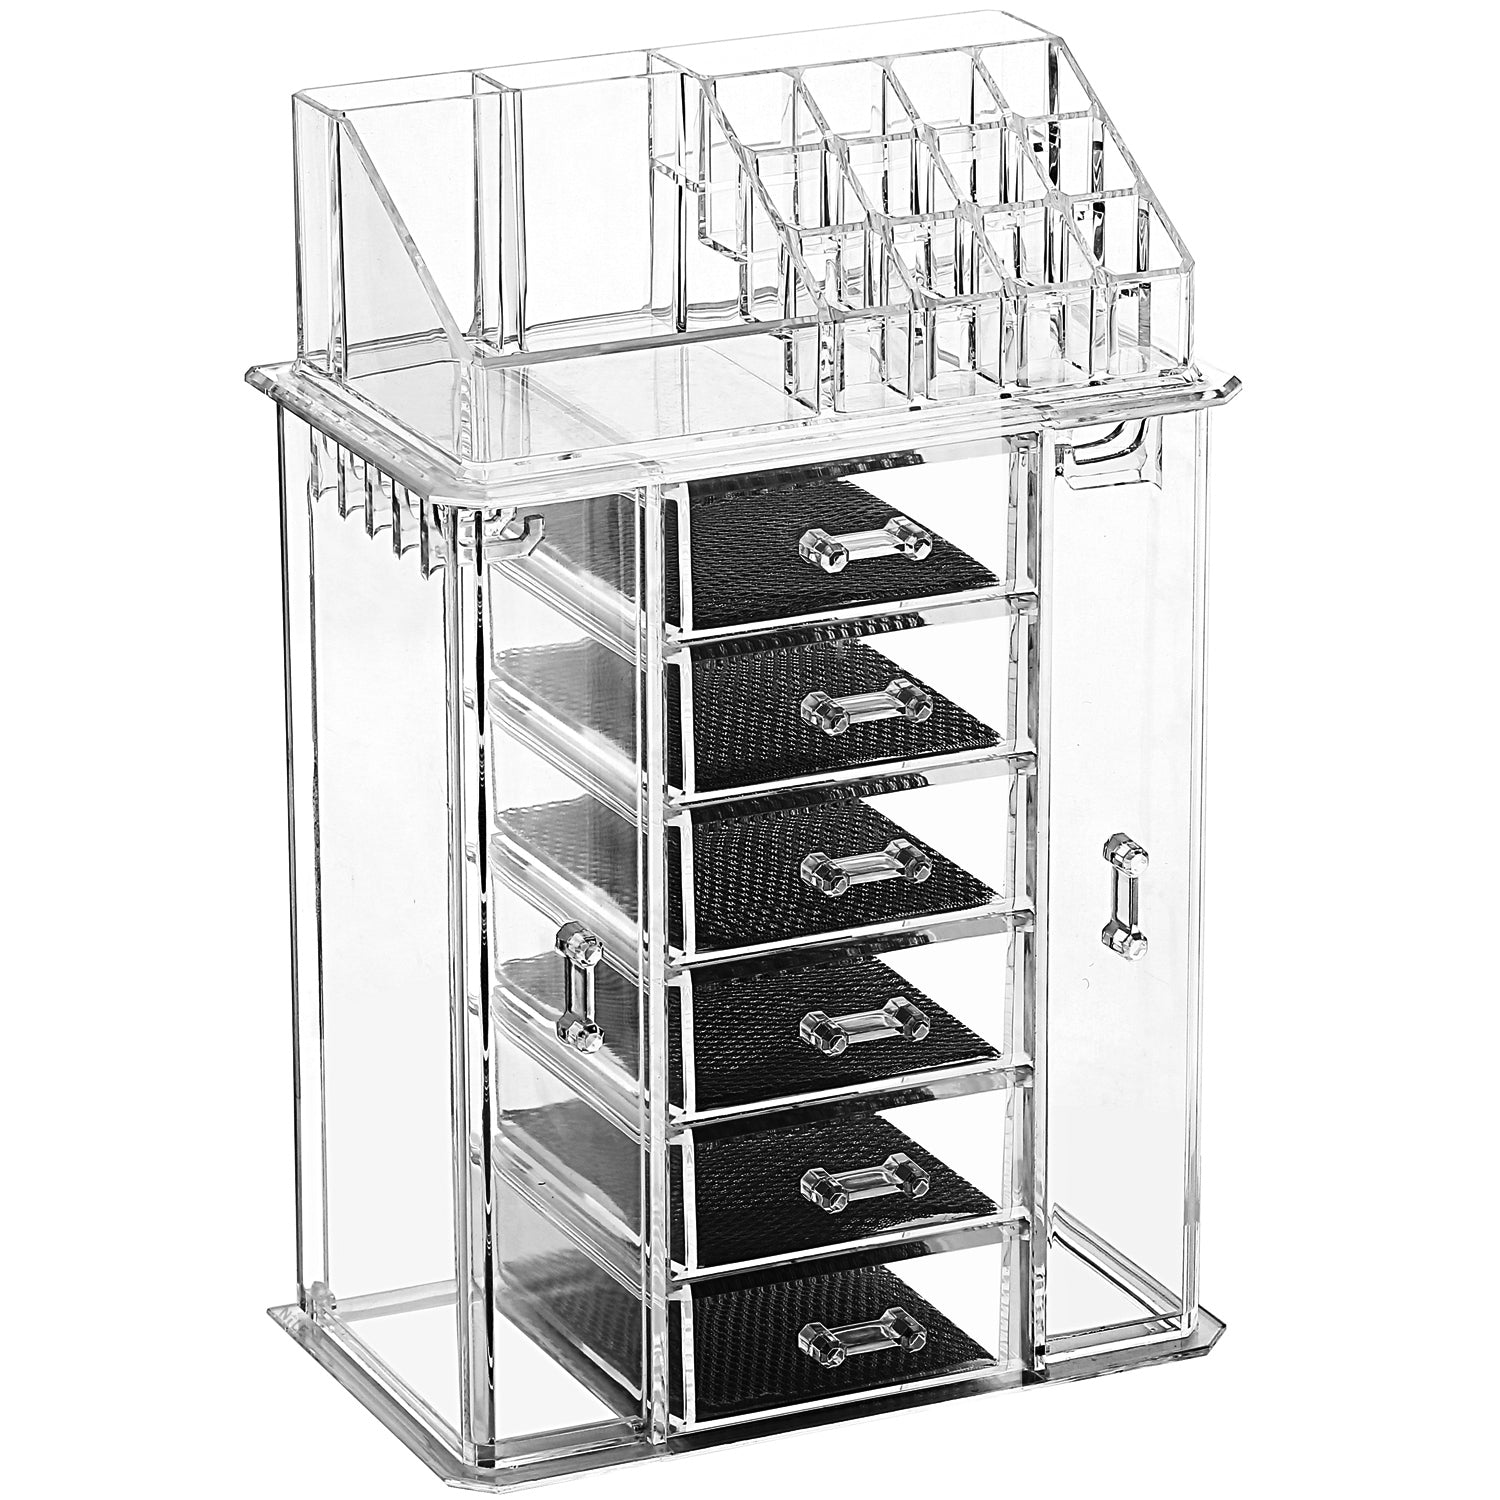 Ikee Design® Acrylic Makeup Organizer and Jewelry Storage Box